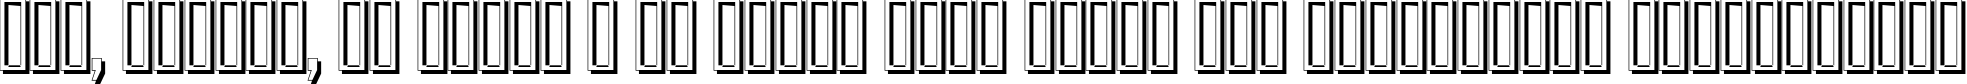 Пример написания шрифтом Enge Holzschrift Shadow текста на украинском